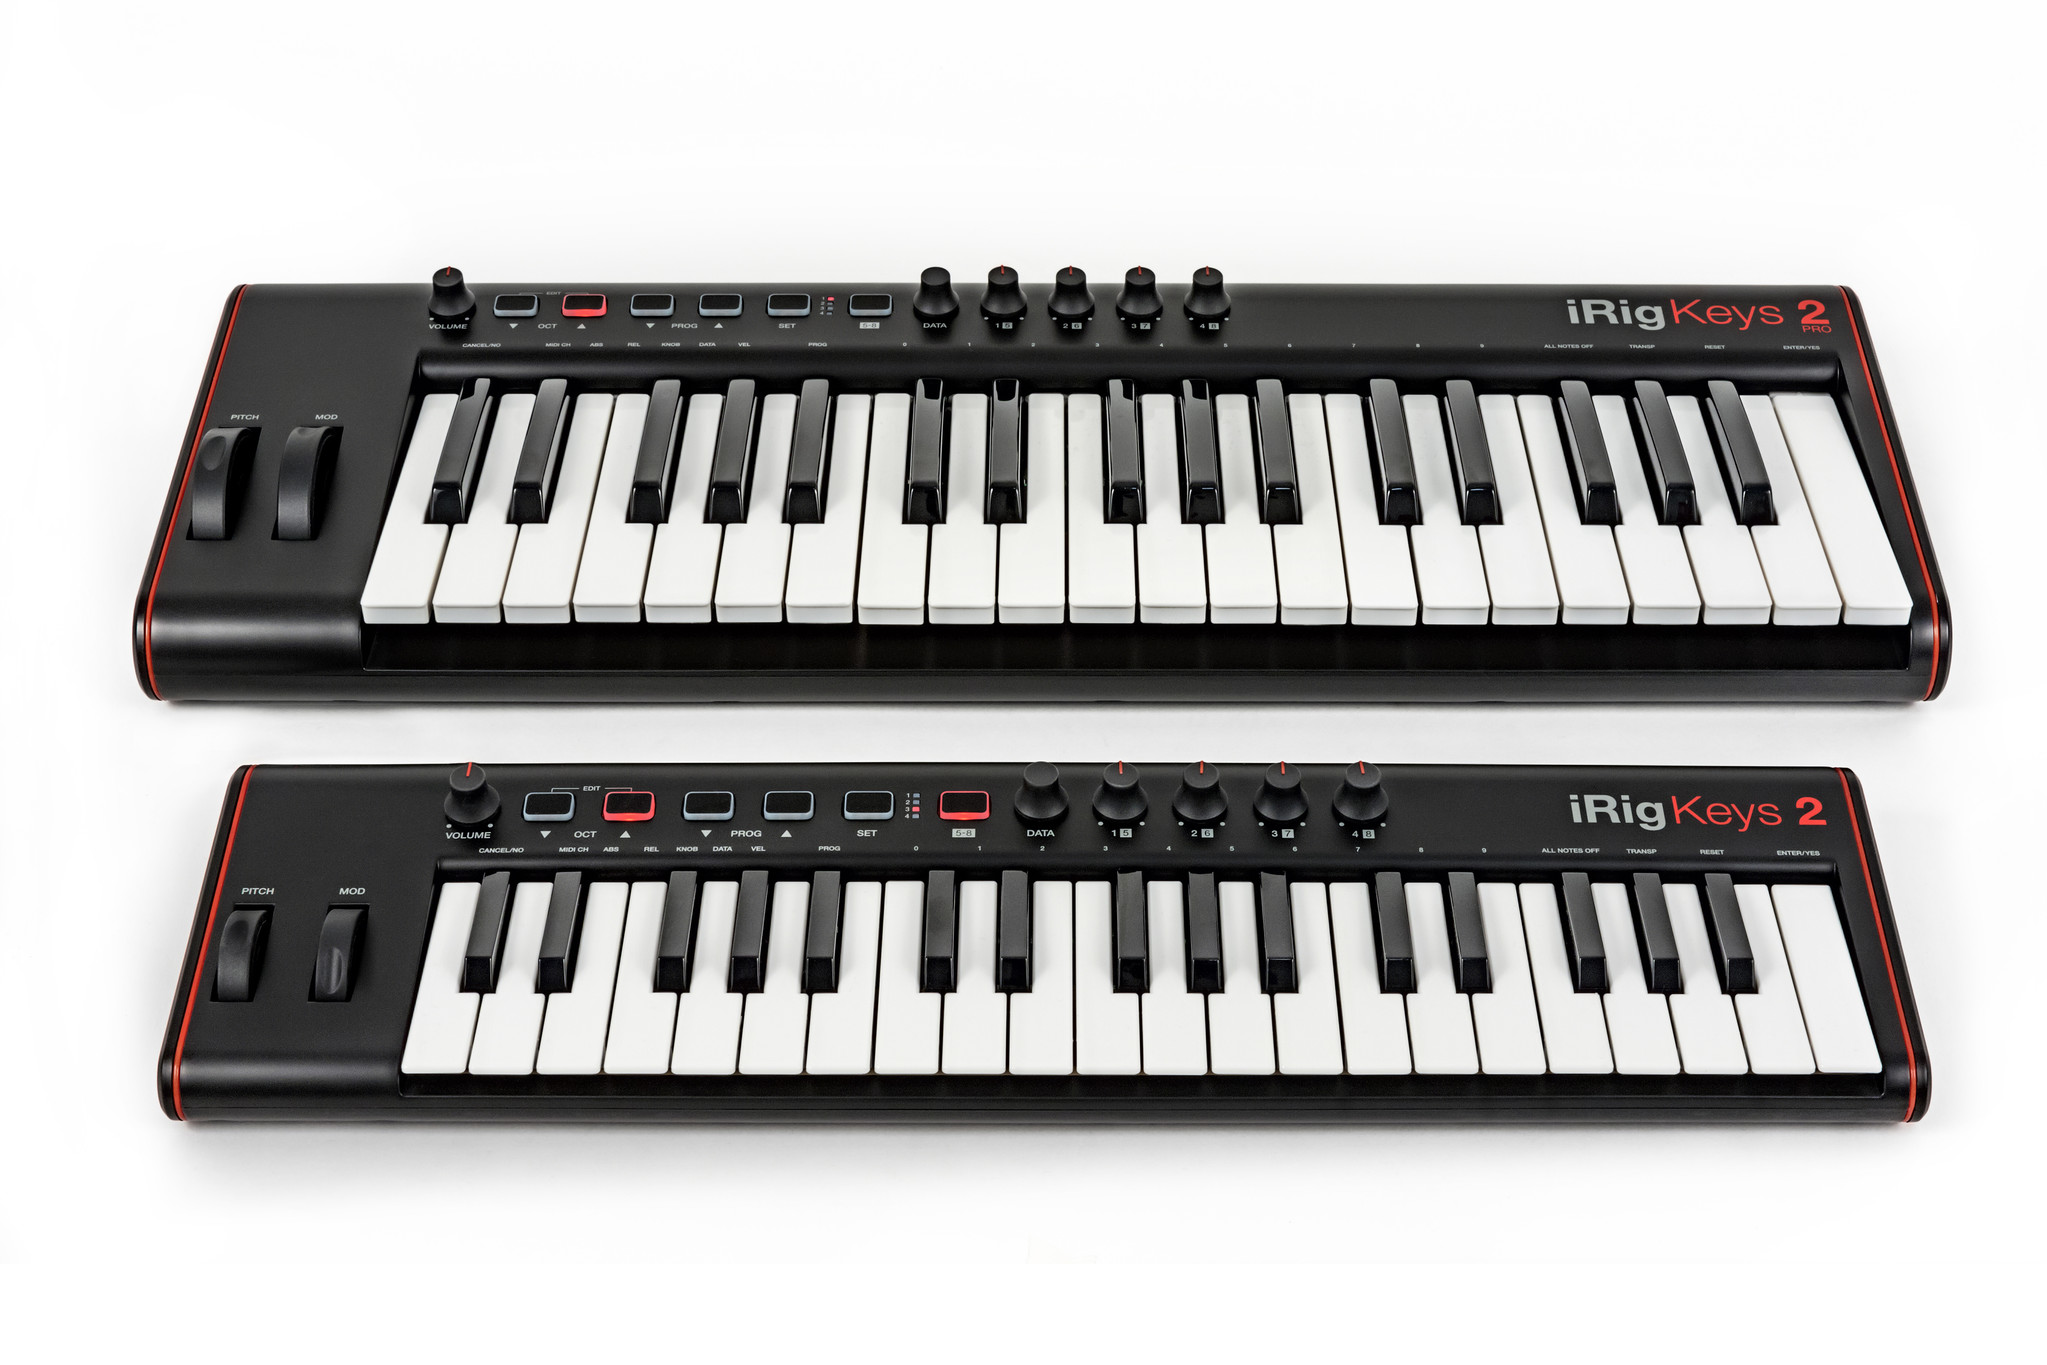 IK Multimediaの次世代型MIDIキーボード「iRig Keys 2 Pro」、「iRig